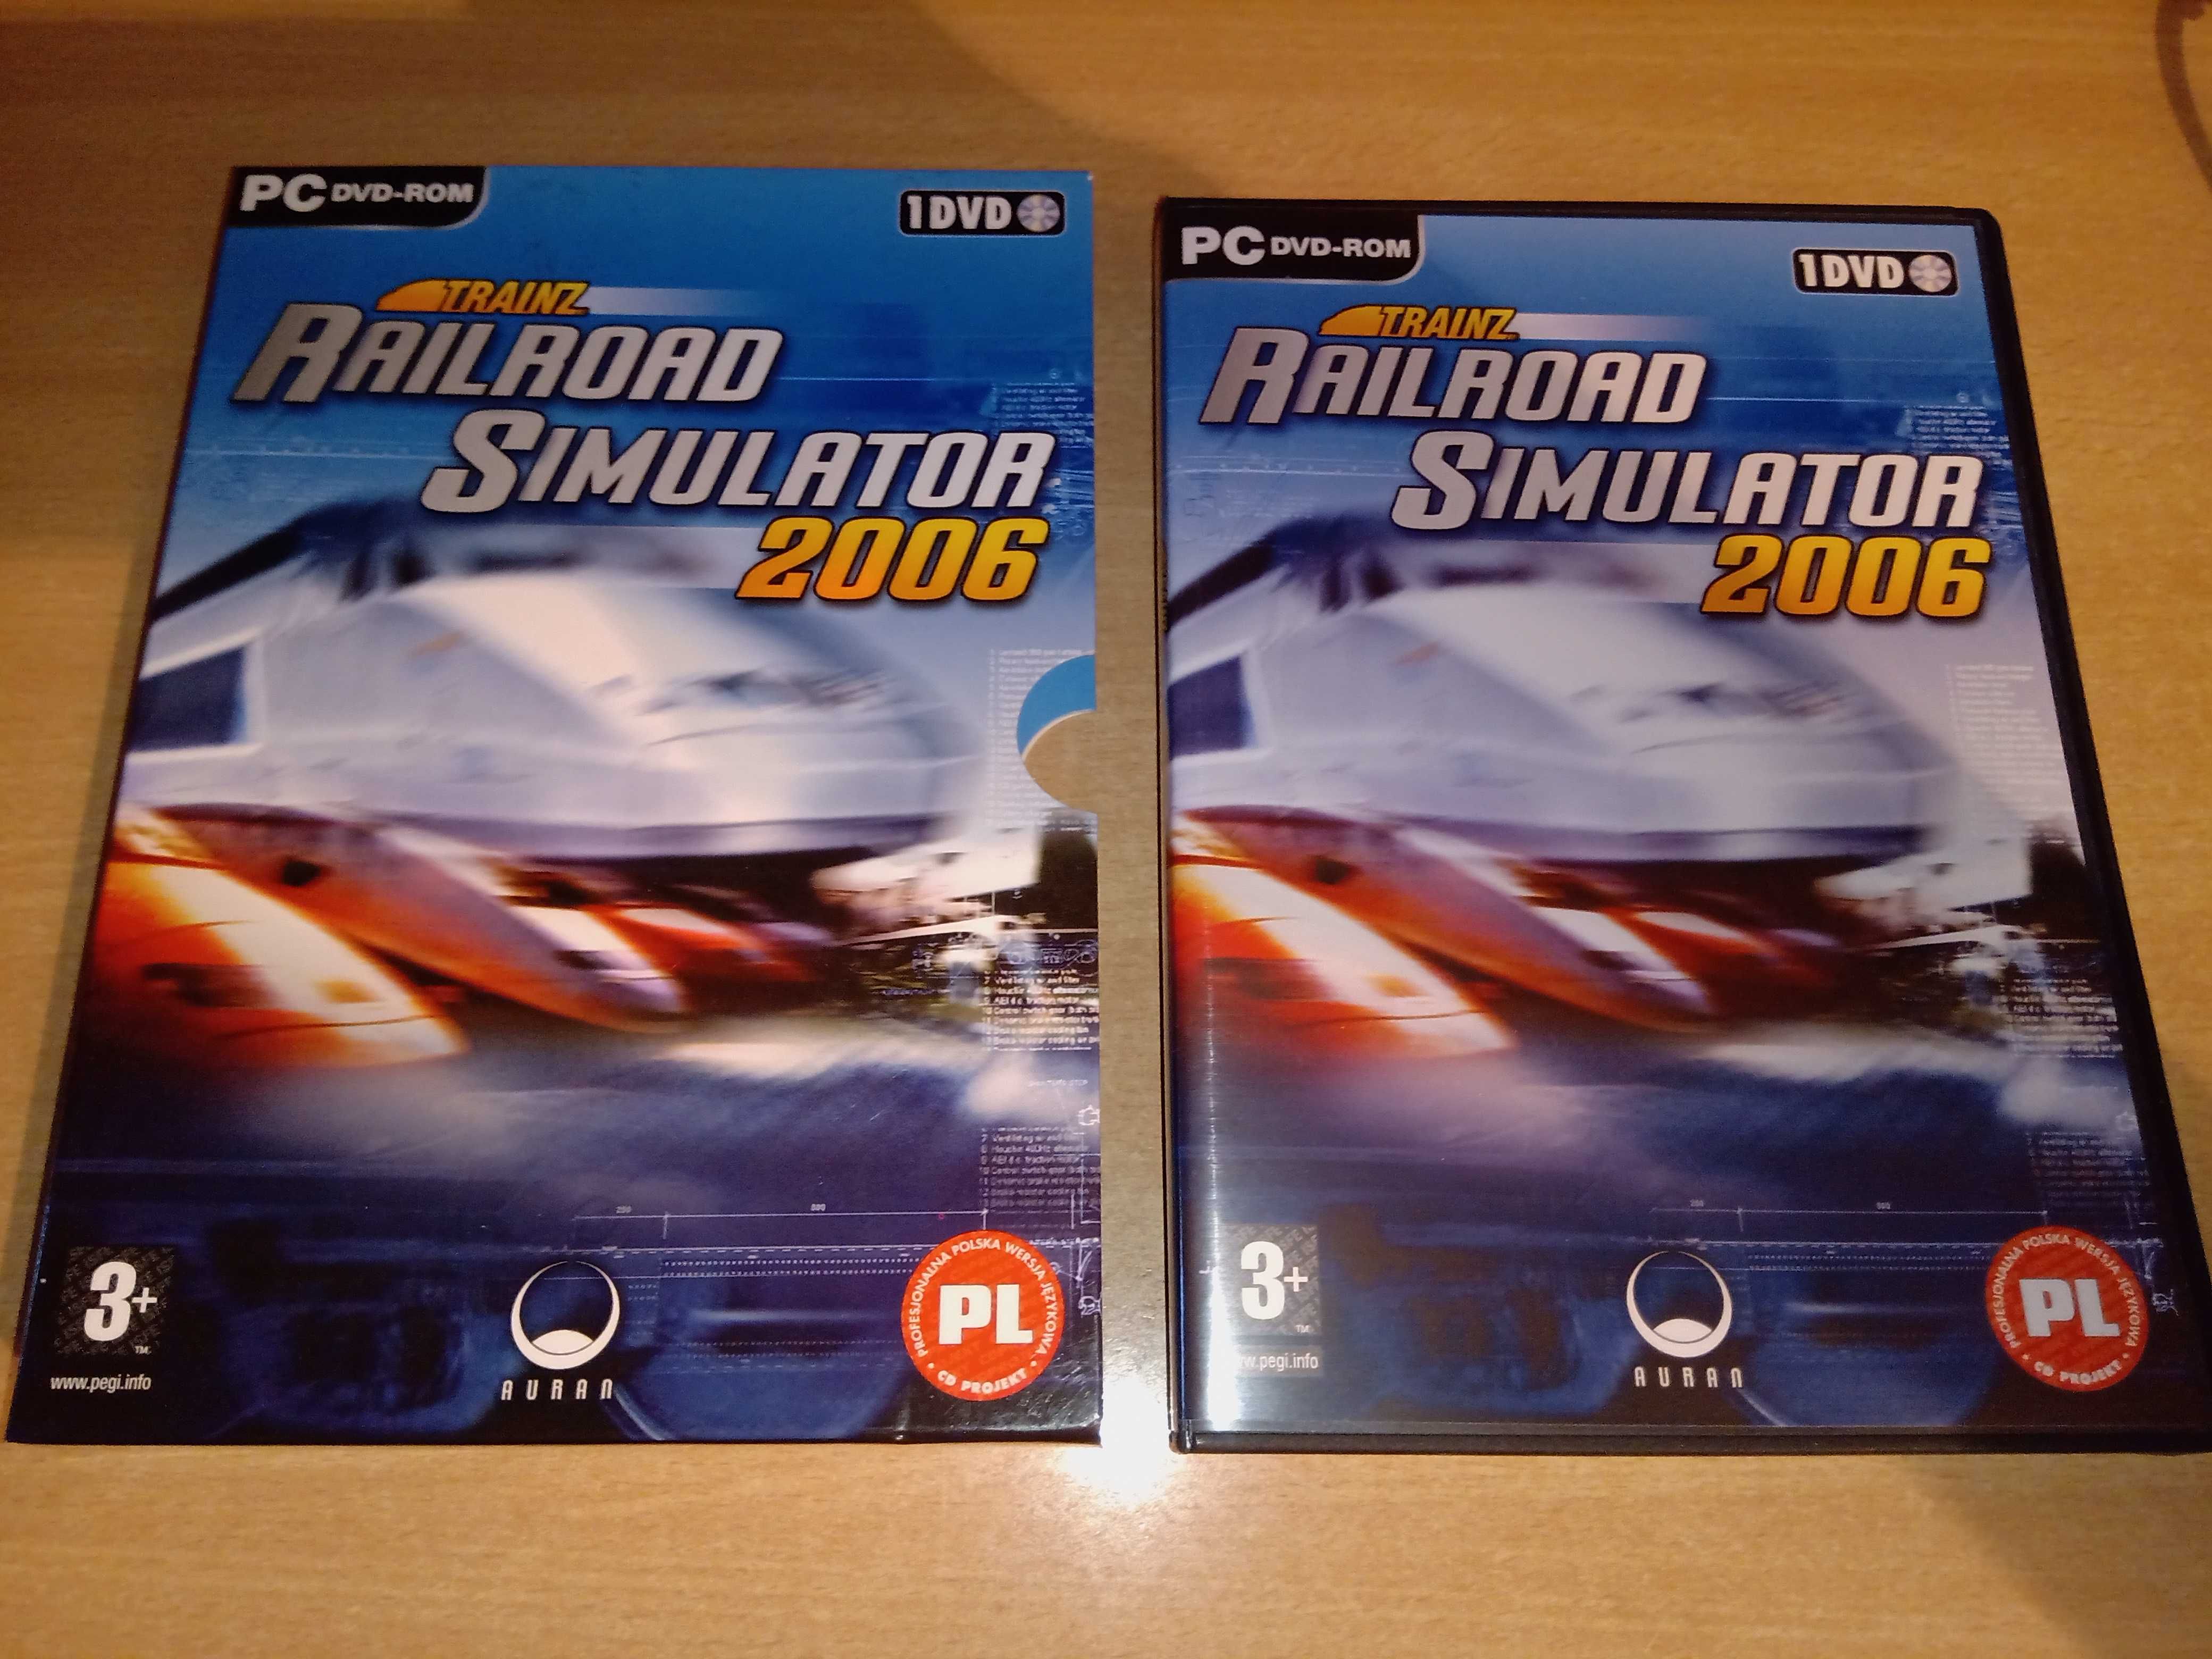 Trainz Railroad Simulator 2006 PC DVD-ROM [1 płyta DVD]